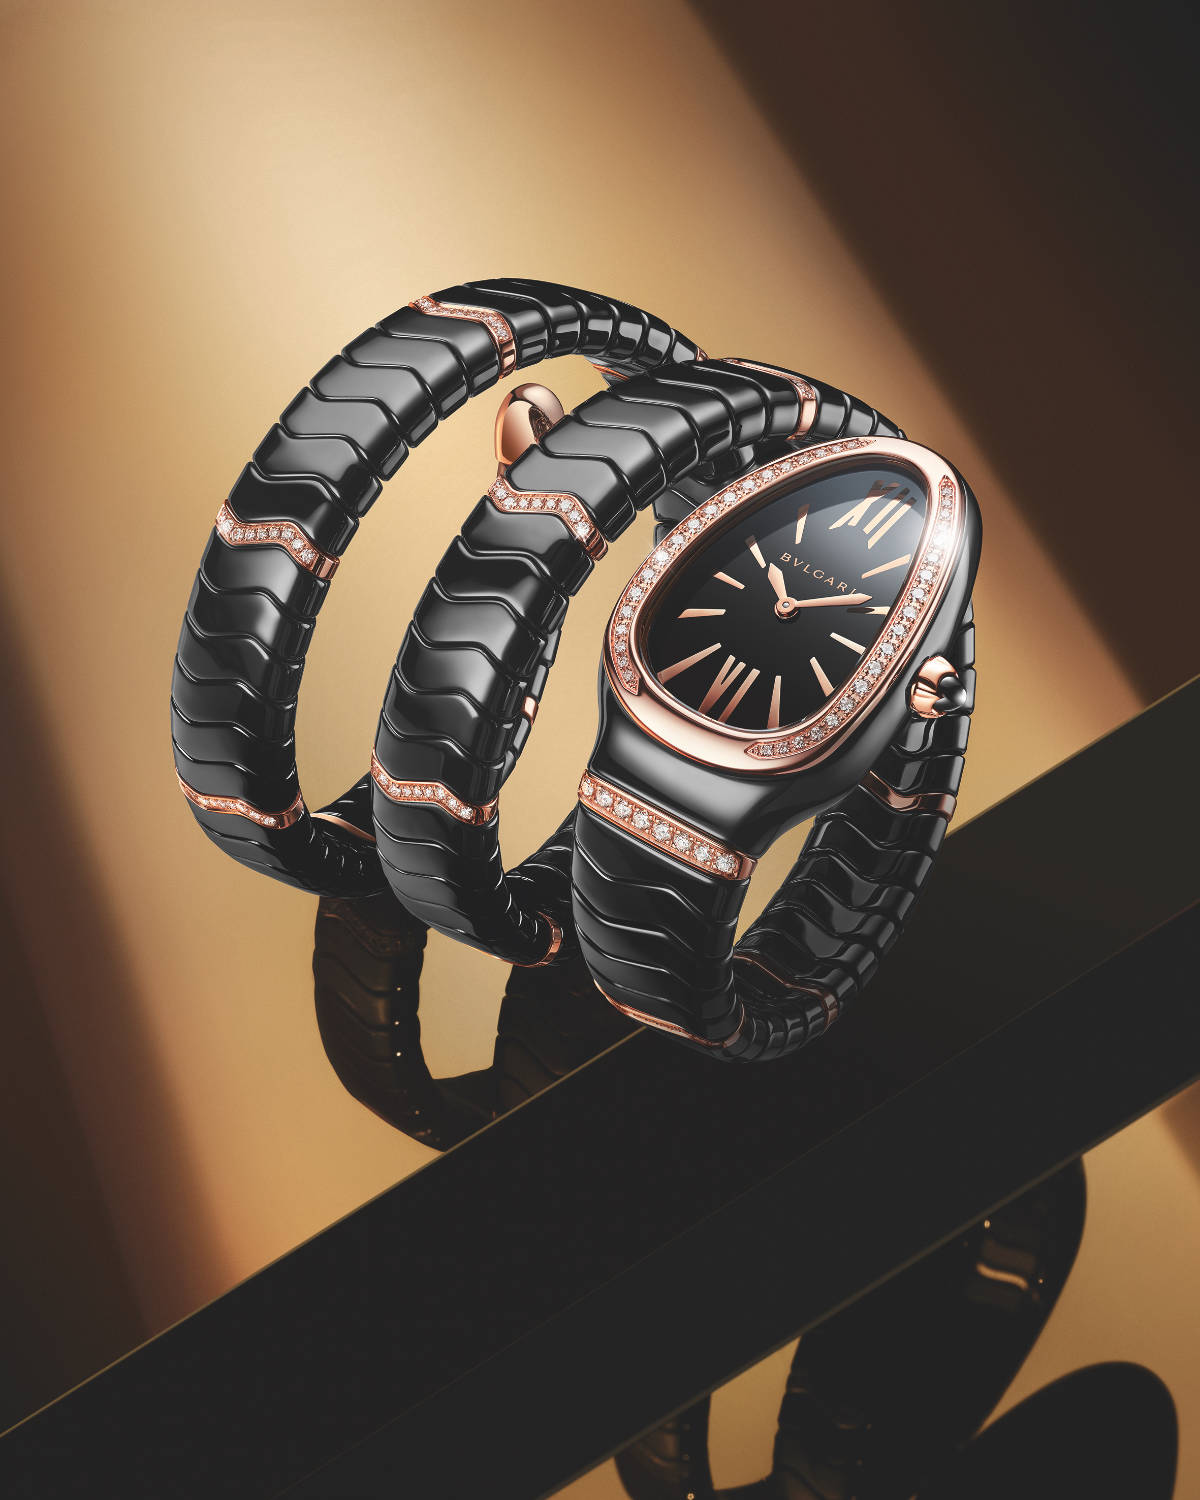 Bulgari Present Its New Serpenti Spiga Ceramic Watch